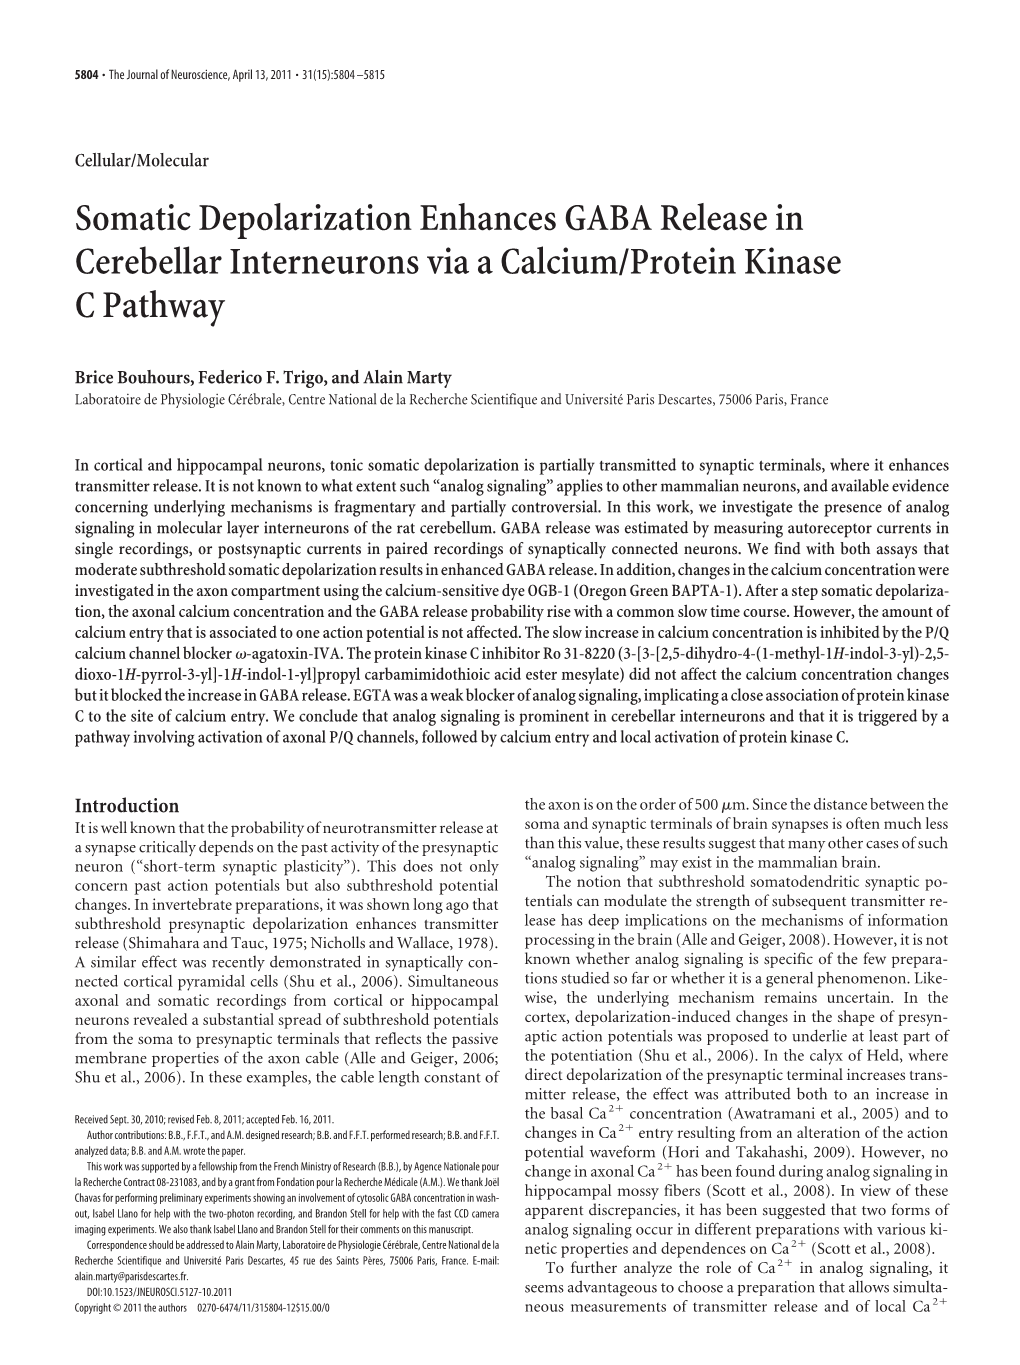 Somatic Depolarization Enhances GABA Release in Cerebellar Interneurons Via a Calcium/Protein Kinase C Pathway